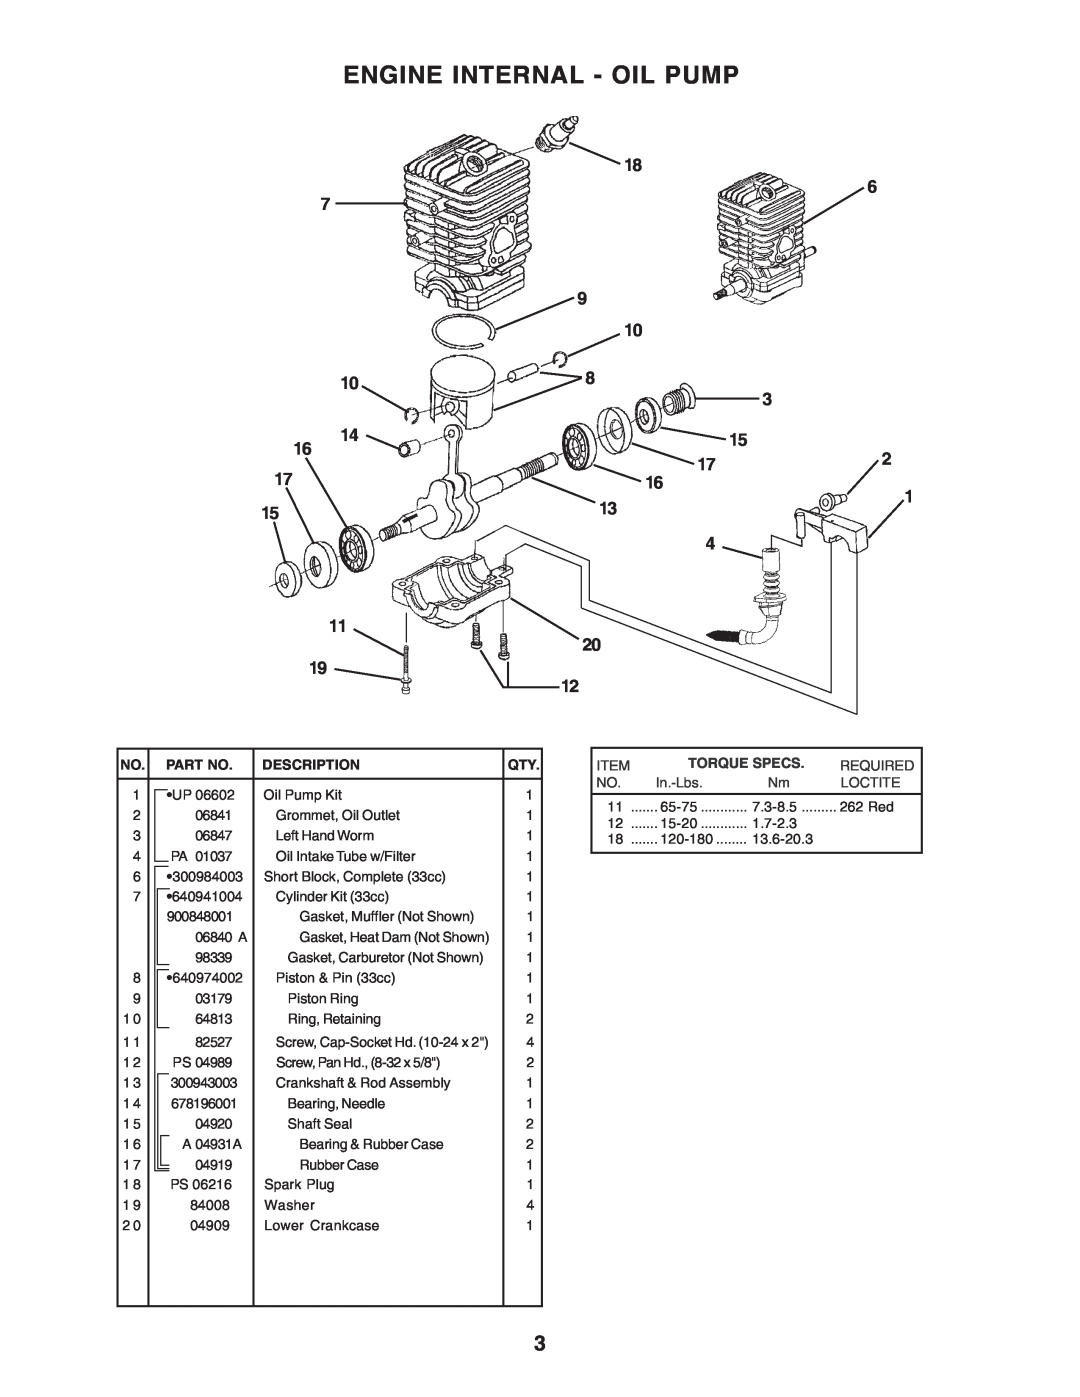 Homelite UT10901B manual Engine Internal - Oil Pump, Description, Screw, Cap-Socket Hd 